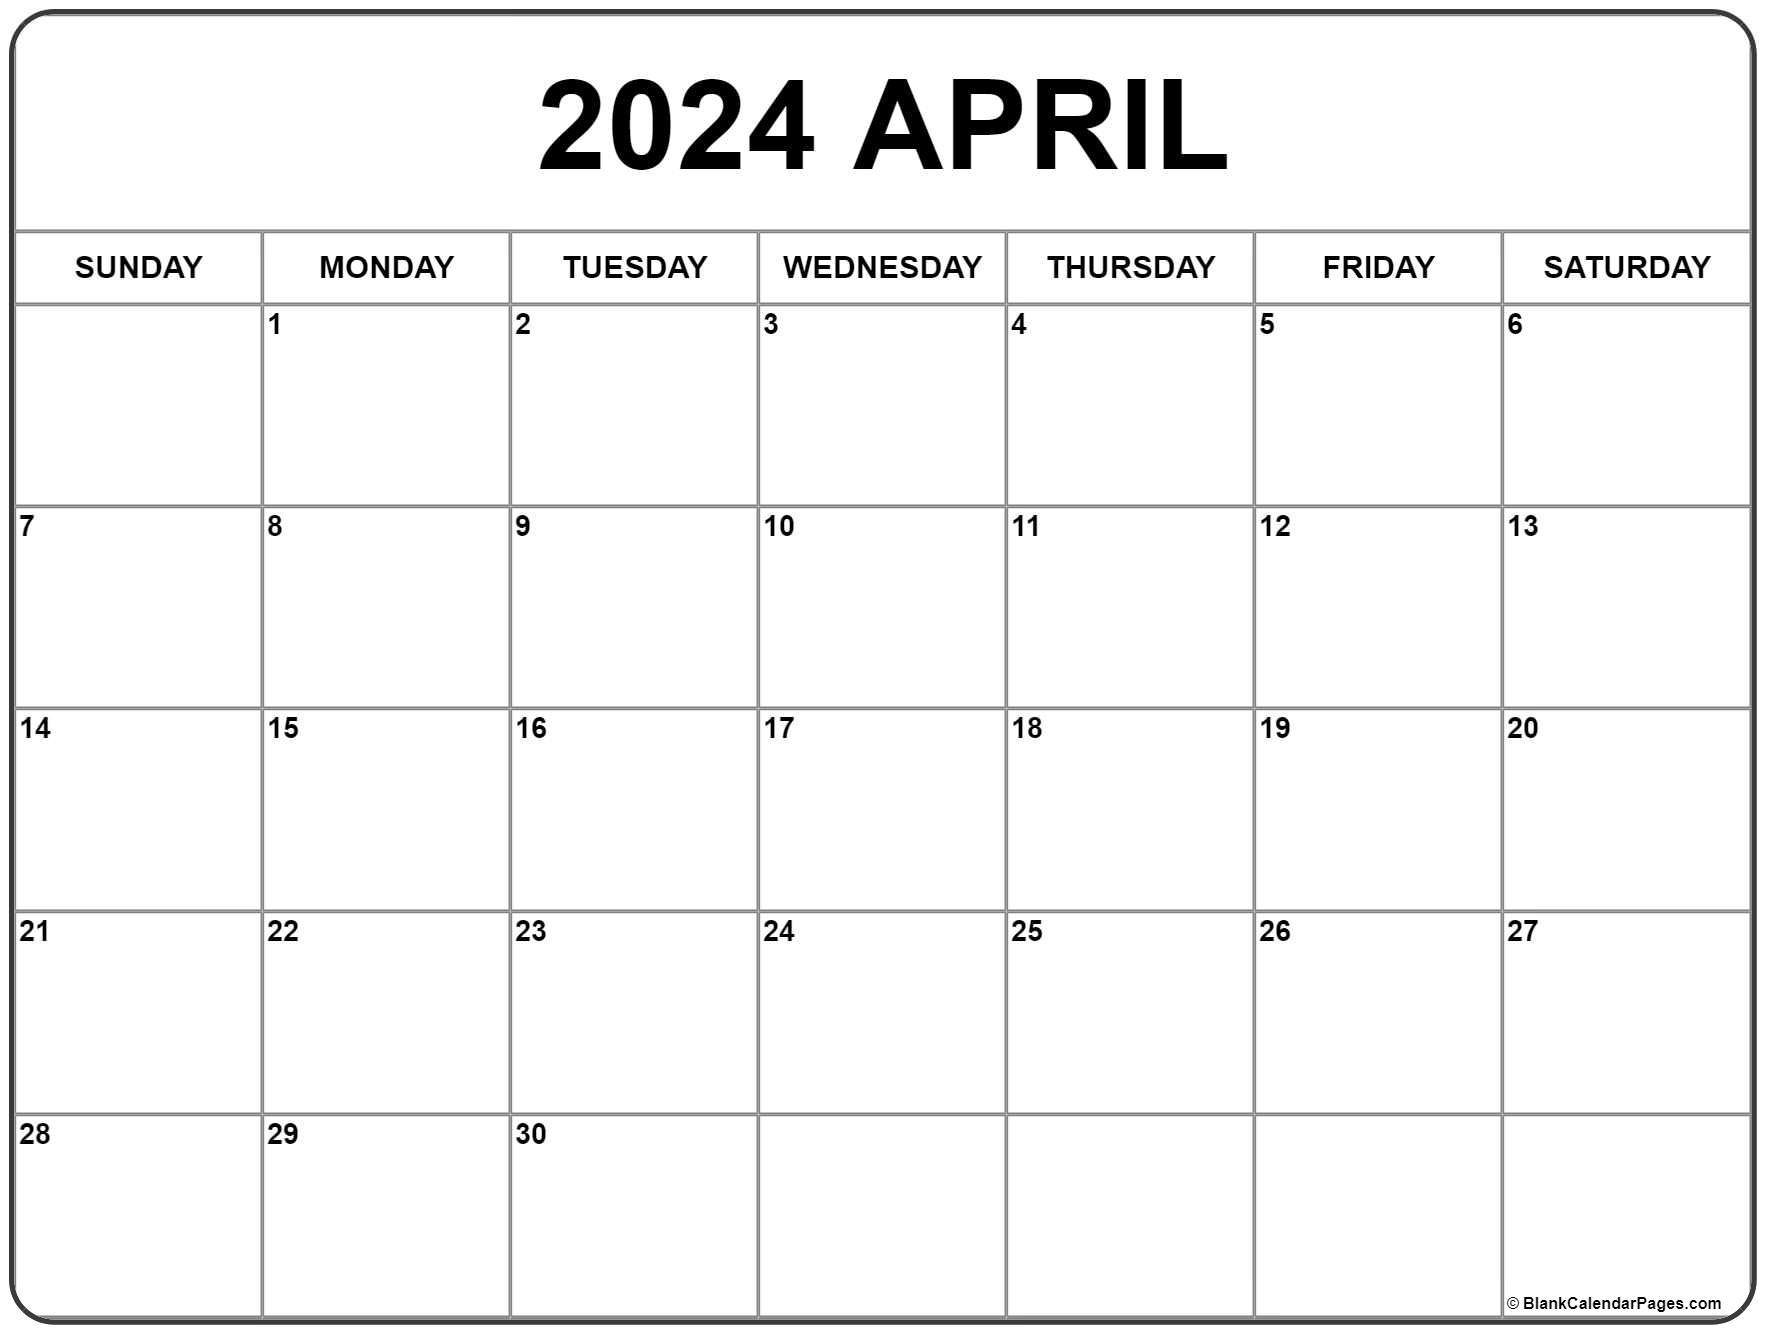 April 2020 Calendar